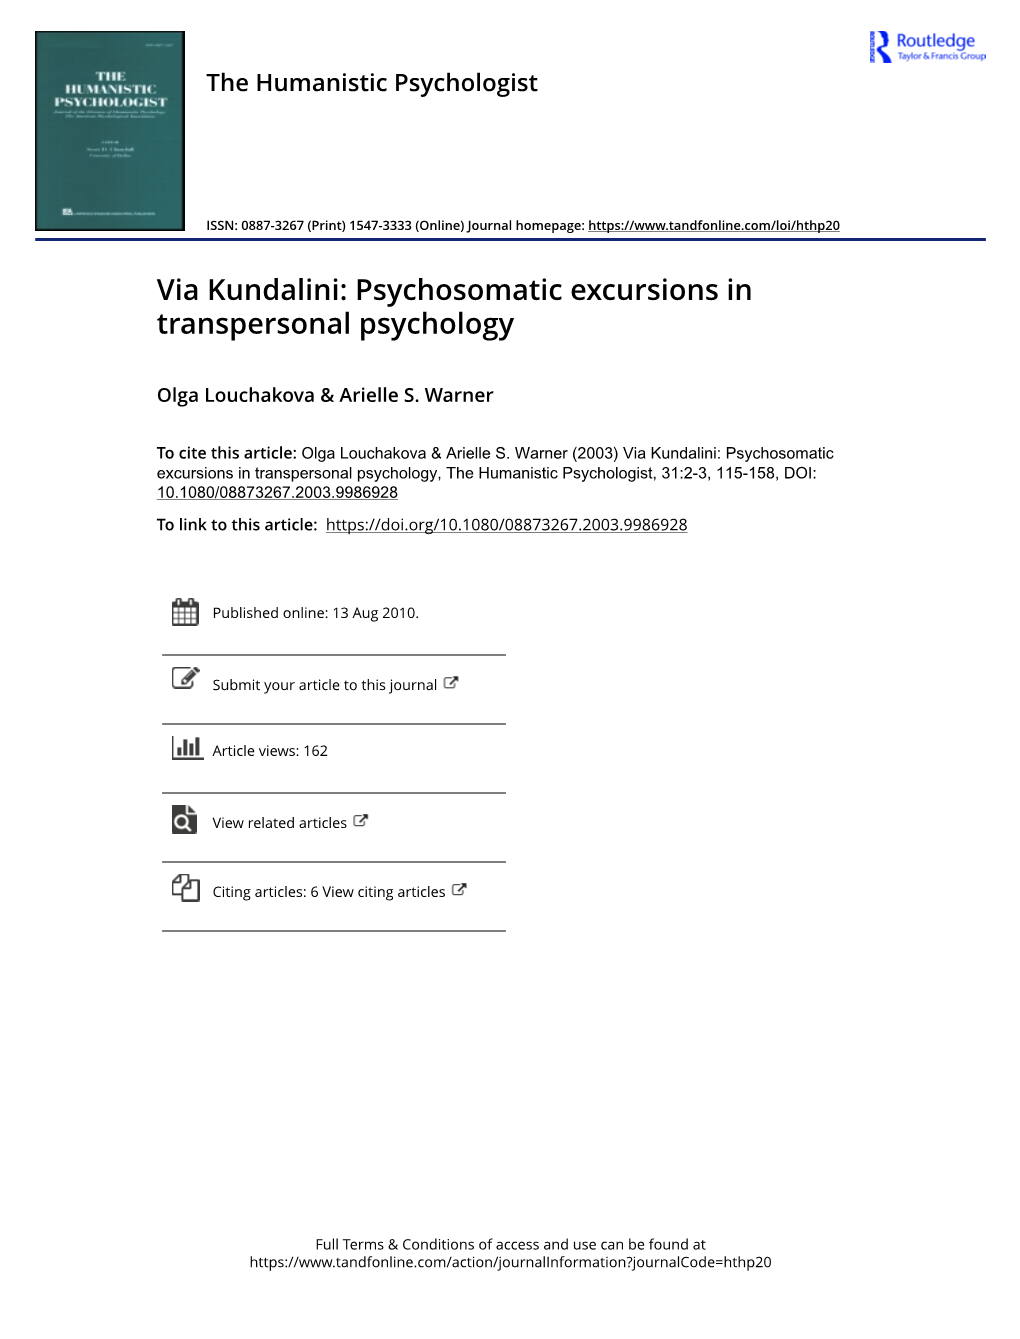 Via Kundalini: Psychosomatic Excursions in Transpersonal Psychology